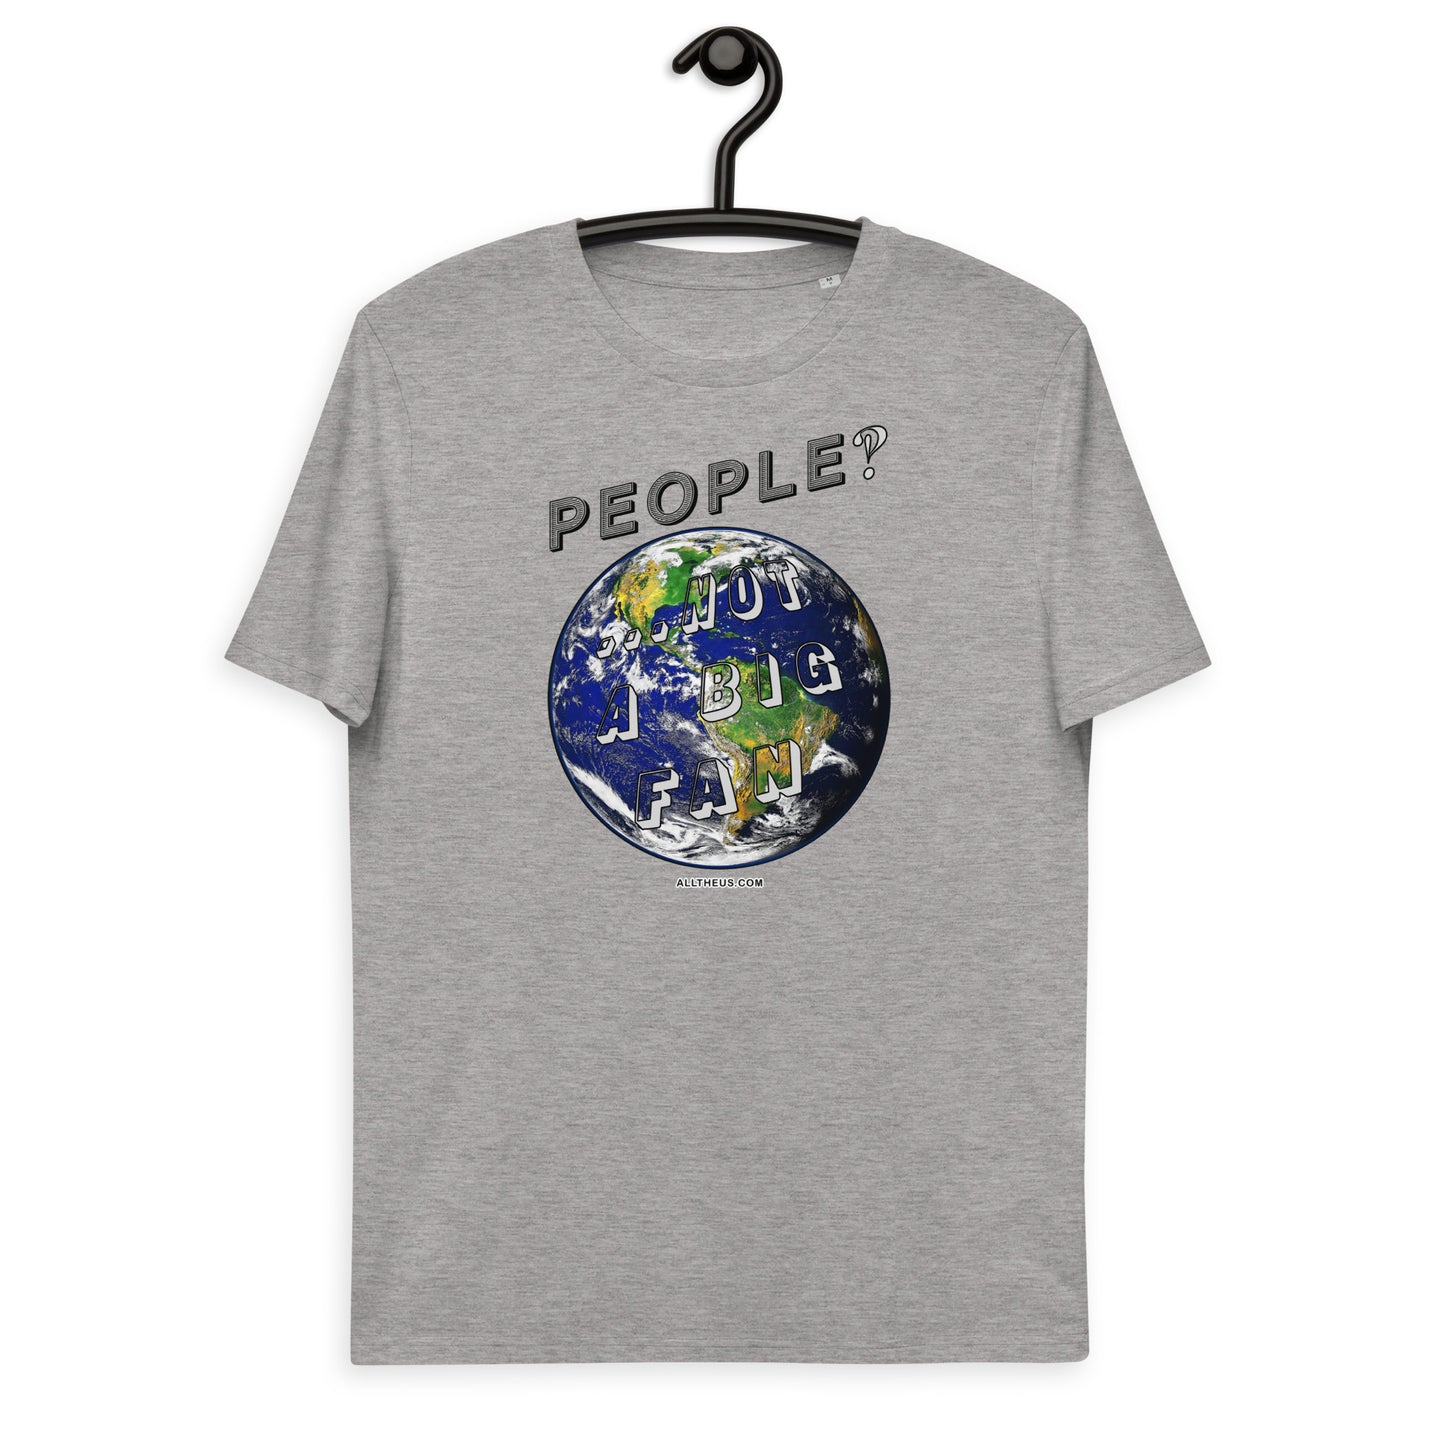 Unisex organic cotton t-shirt - People? ,,, Not A Big Fan!?